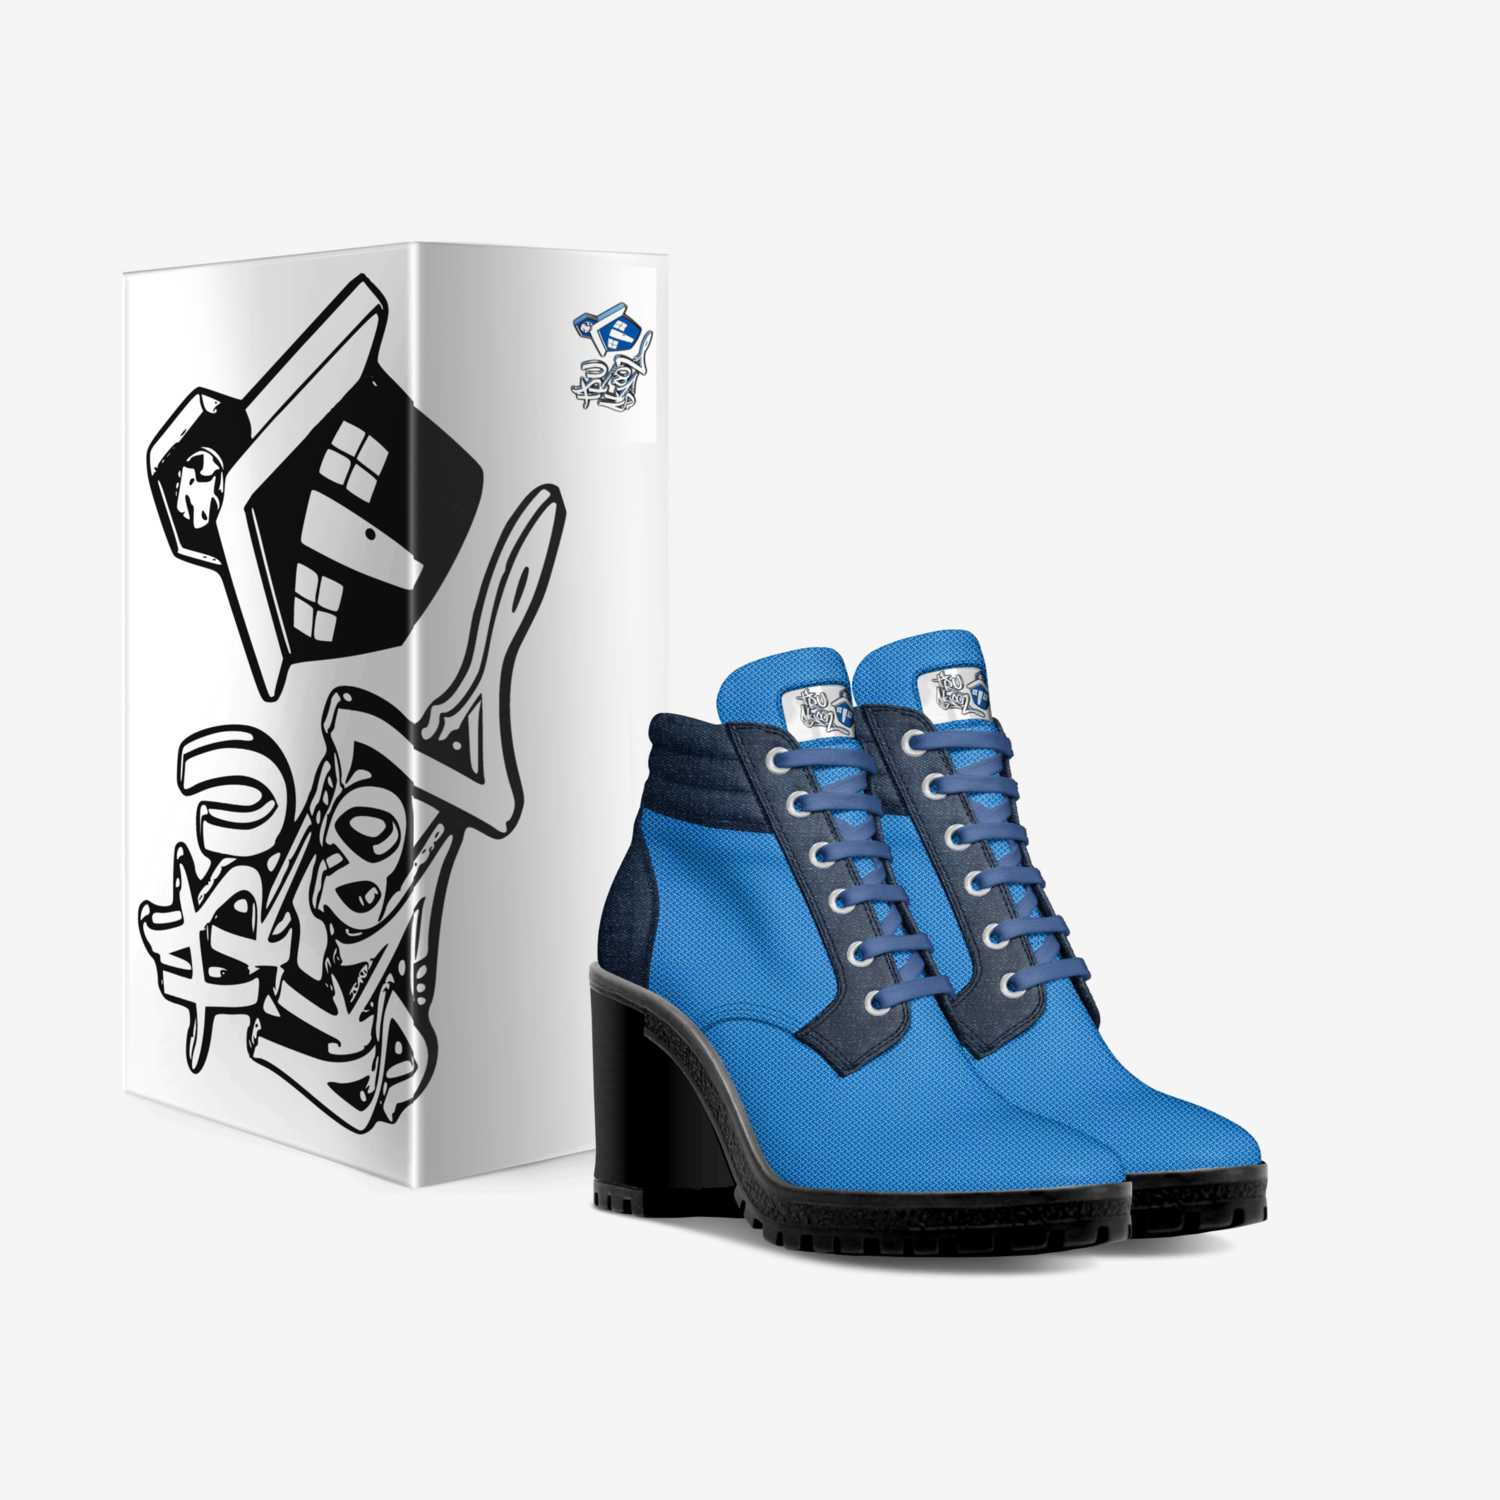 Tru-Blu custom made in Italy shoes by Tru Skool Entertainment | Box view